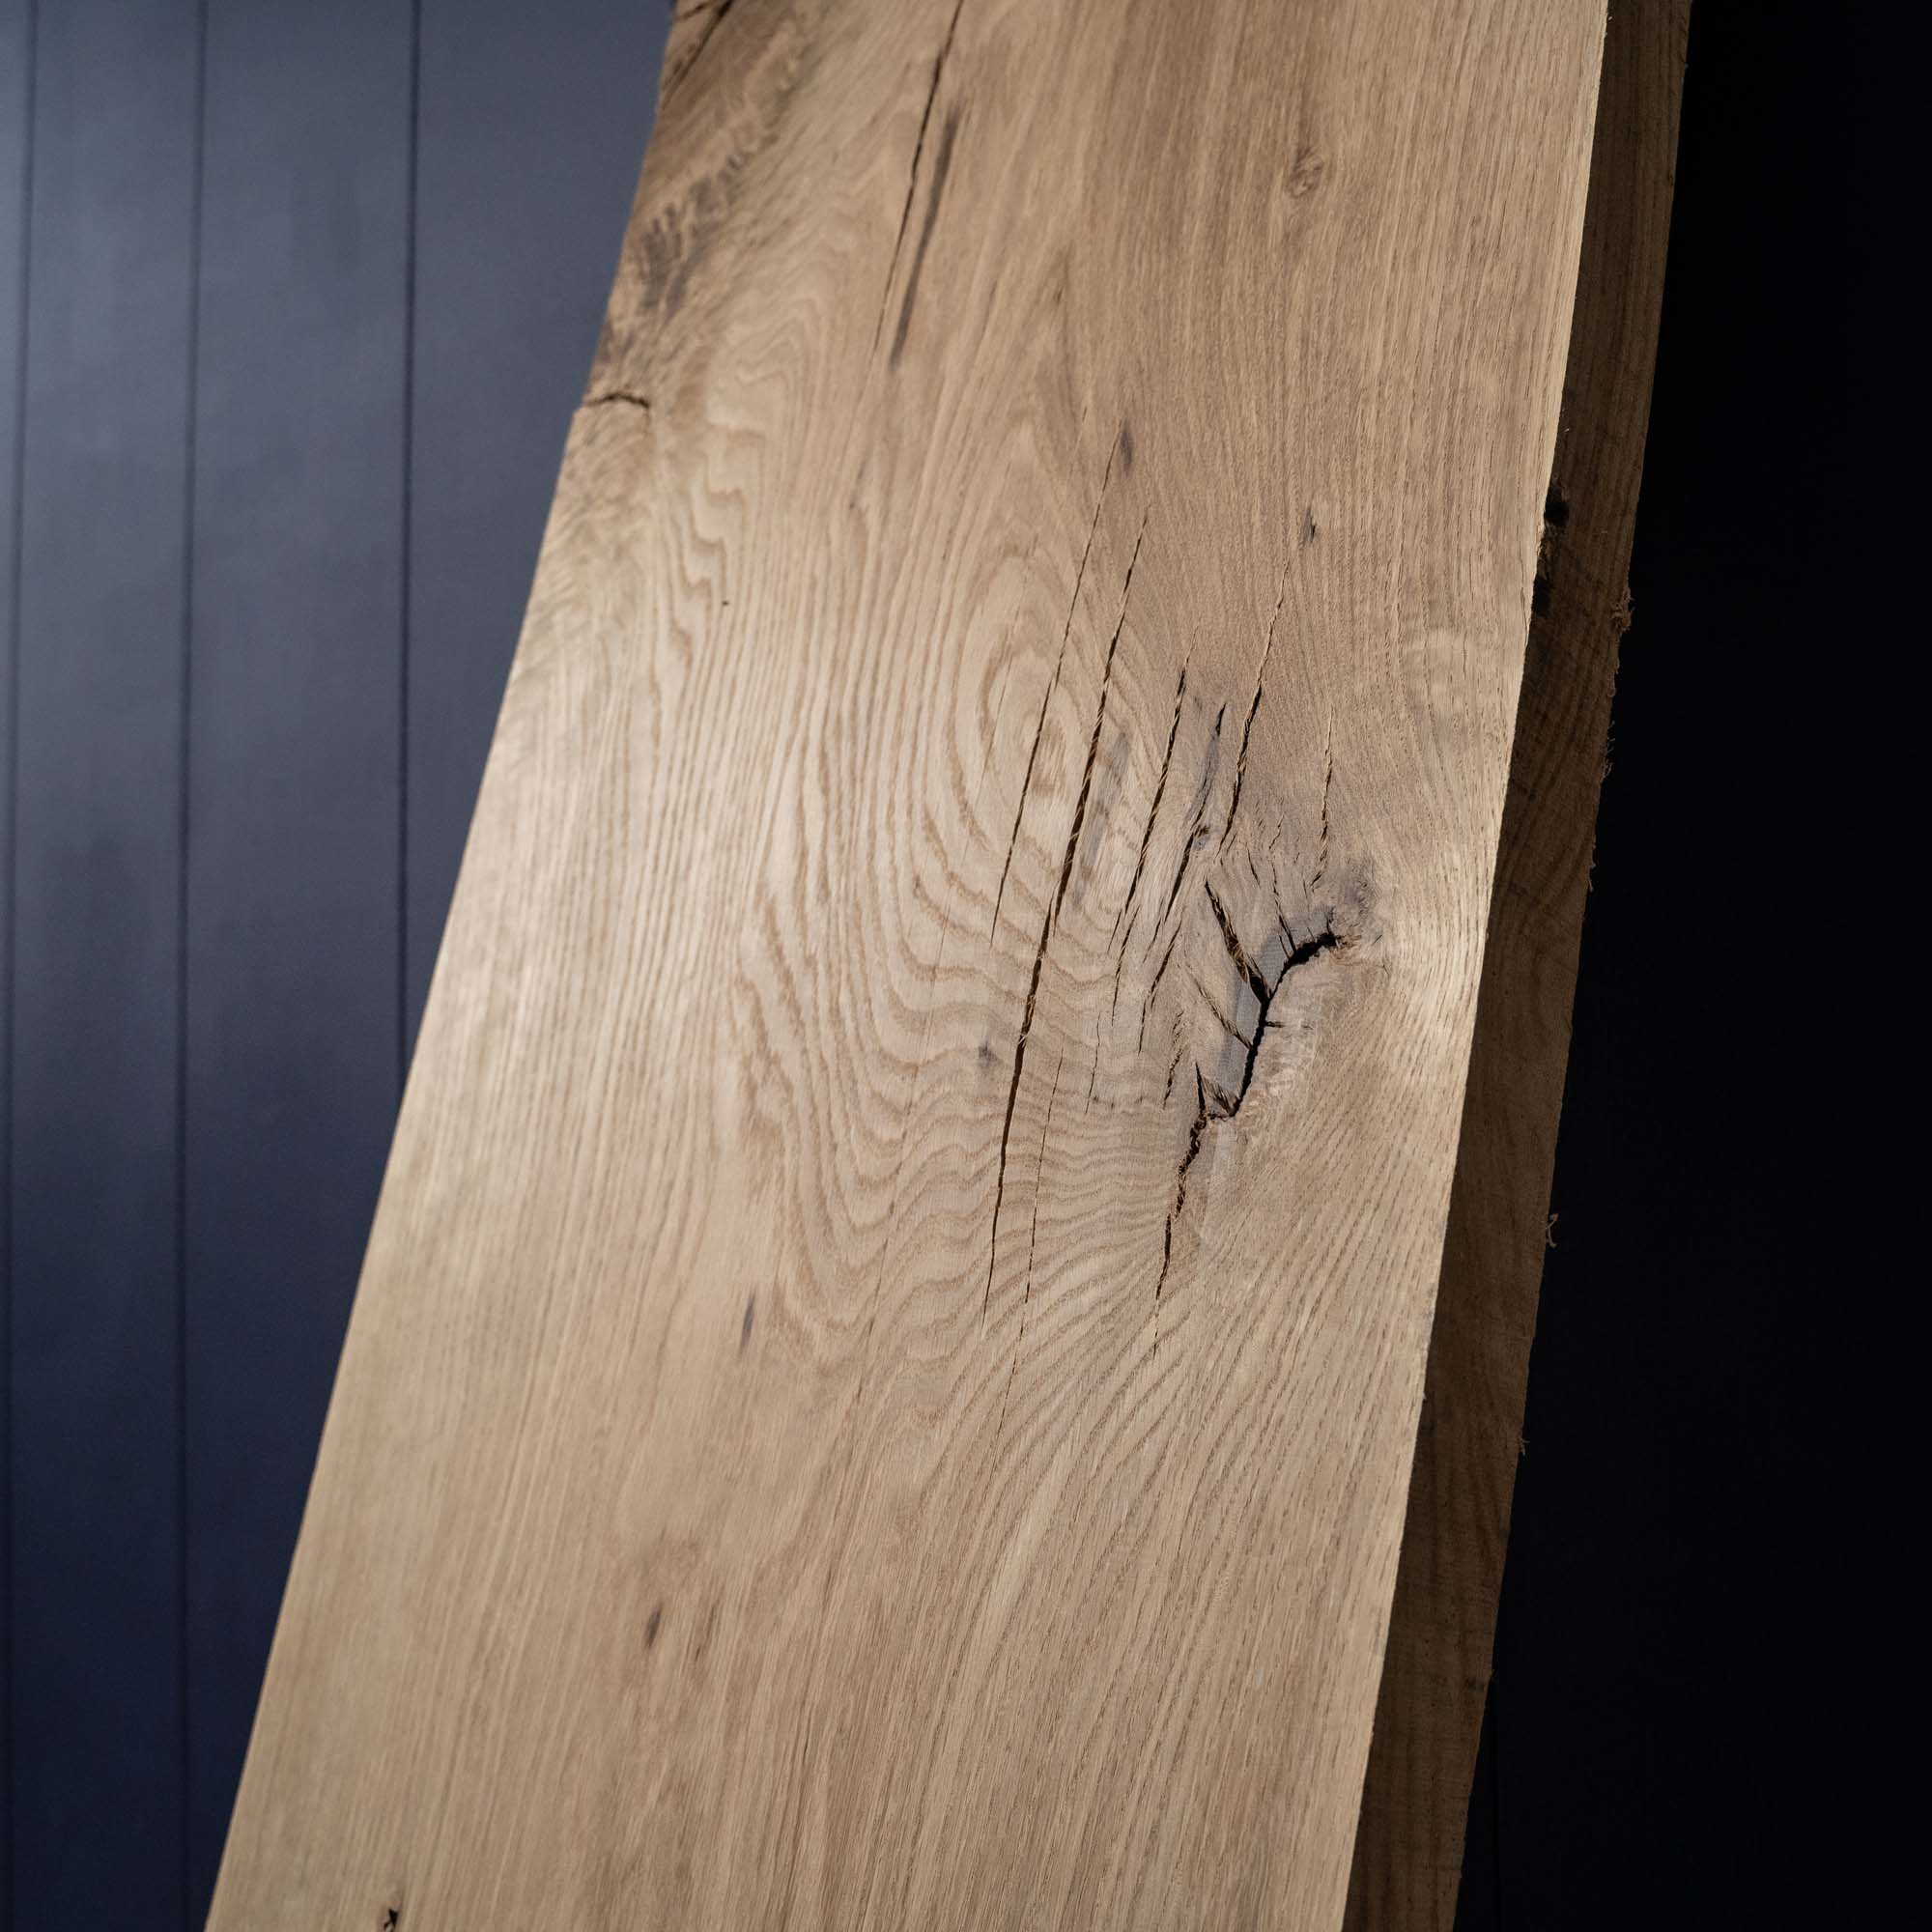 White Oak Plywood, Hardwood Lumber